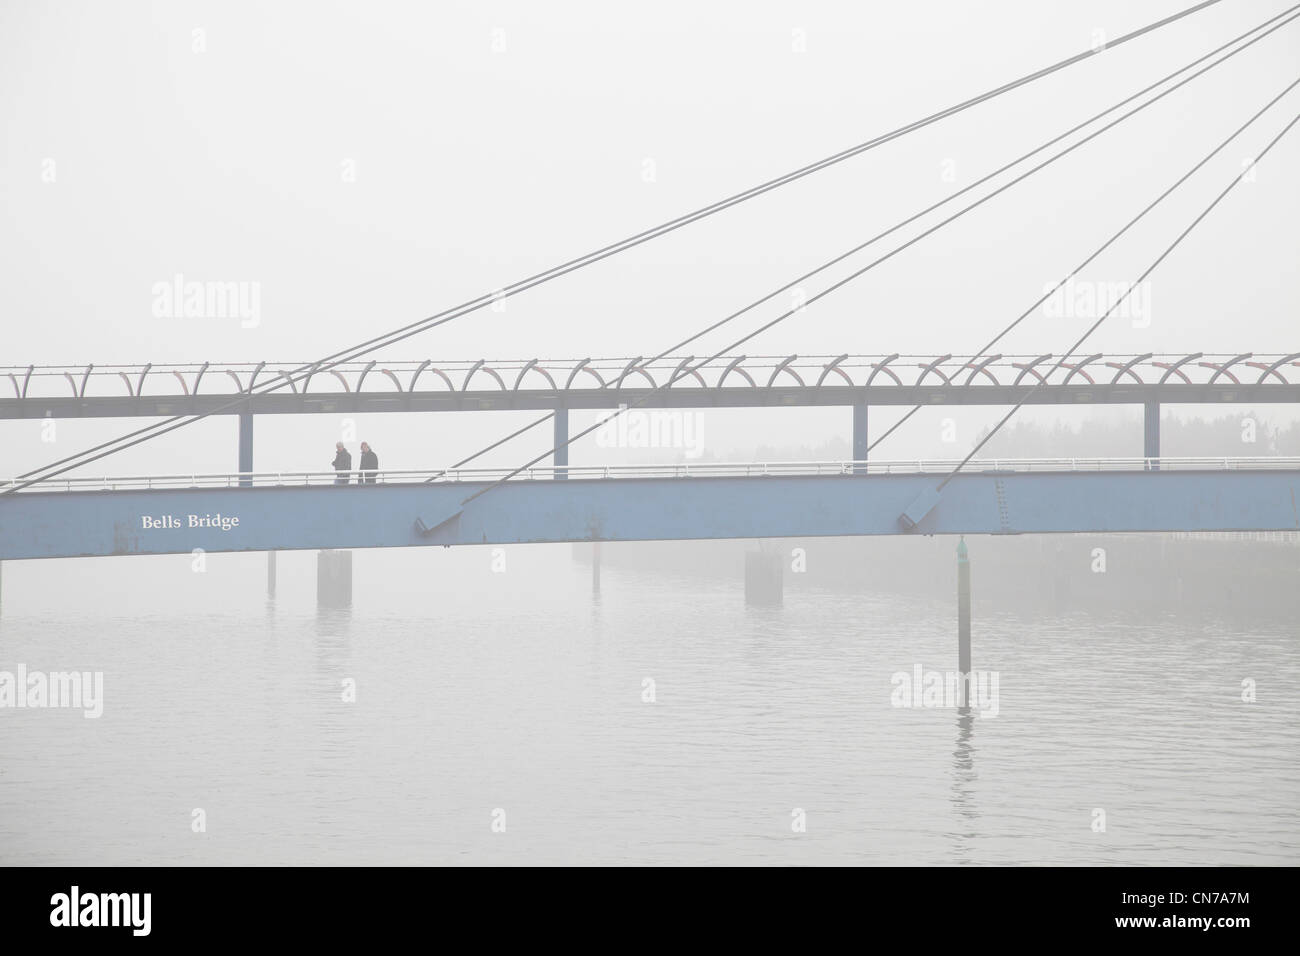 Bells Bridge over the River Clyde in fog, Glasgow, Scotland, UK Stock Photo